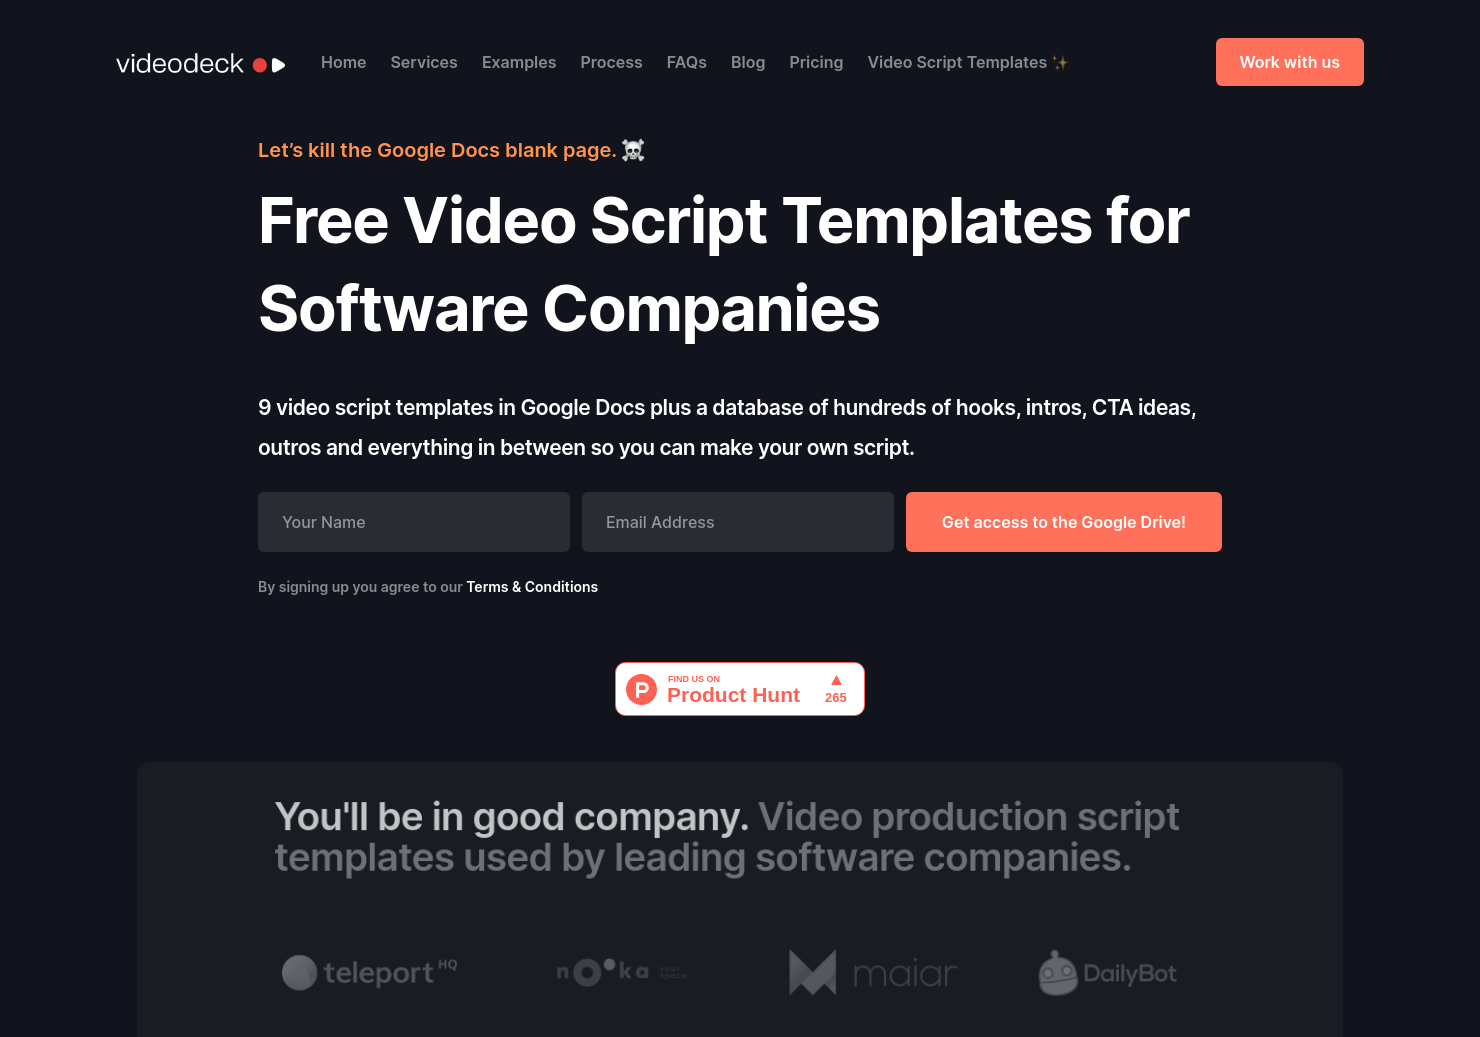 startuptile SaaS Video Script Templates-9 free video script templates + hundreds of copy ideas